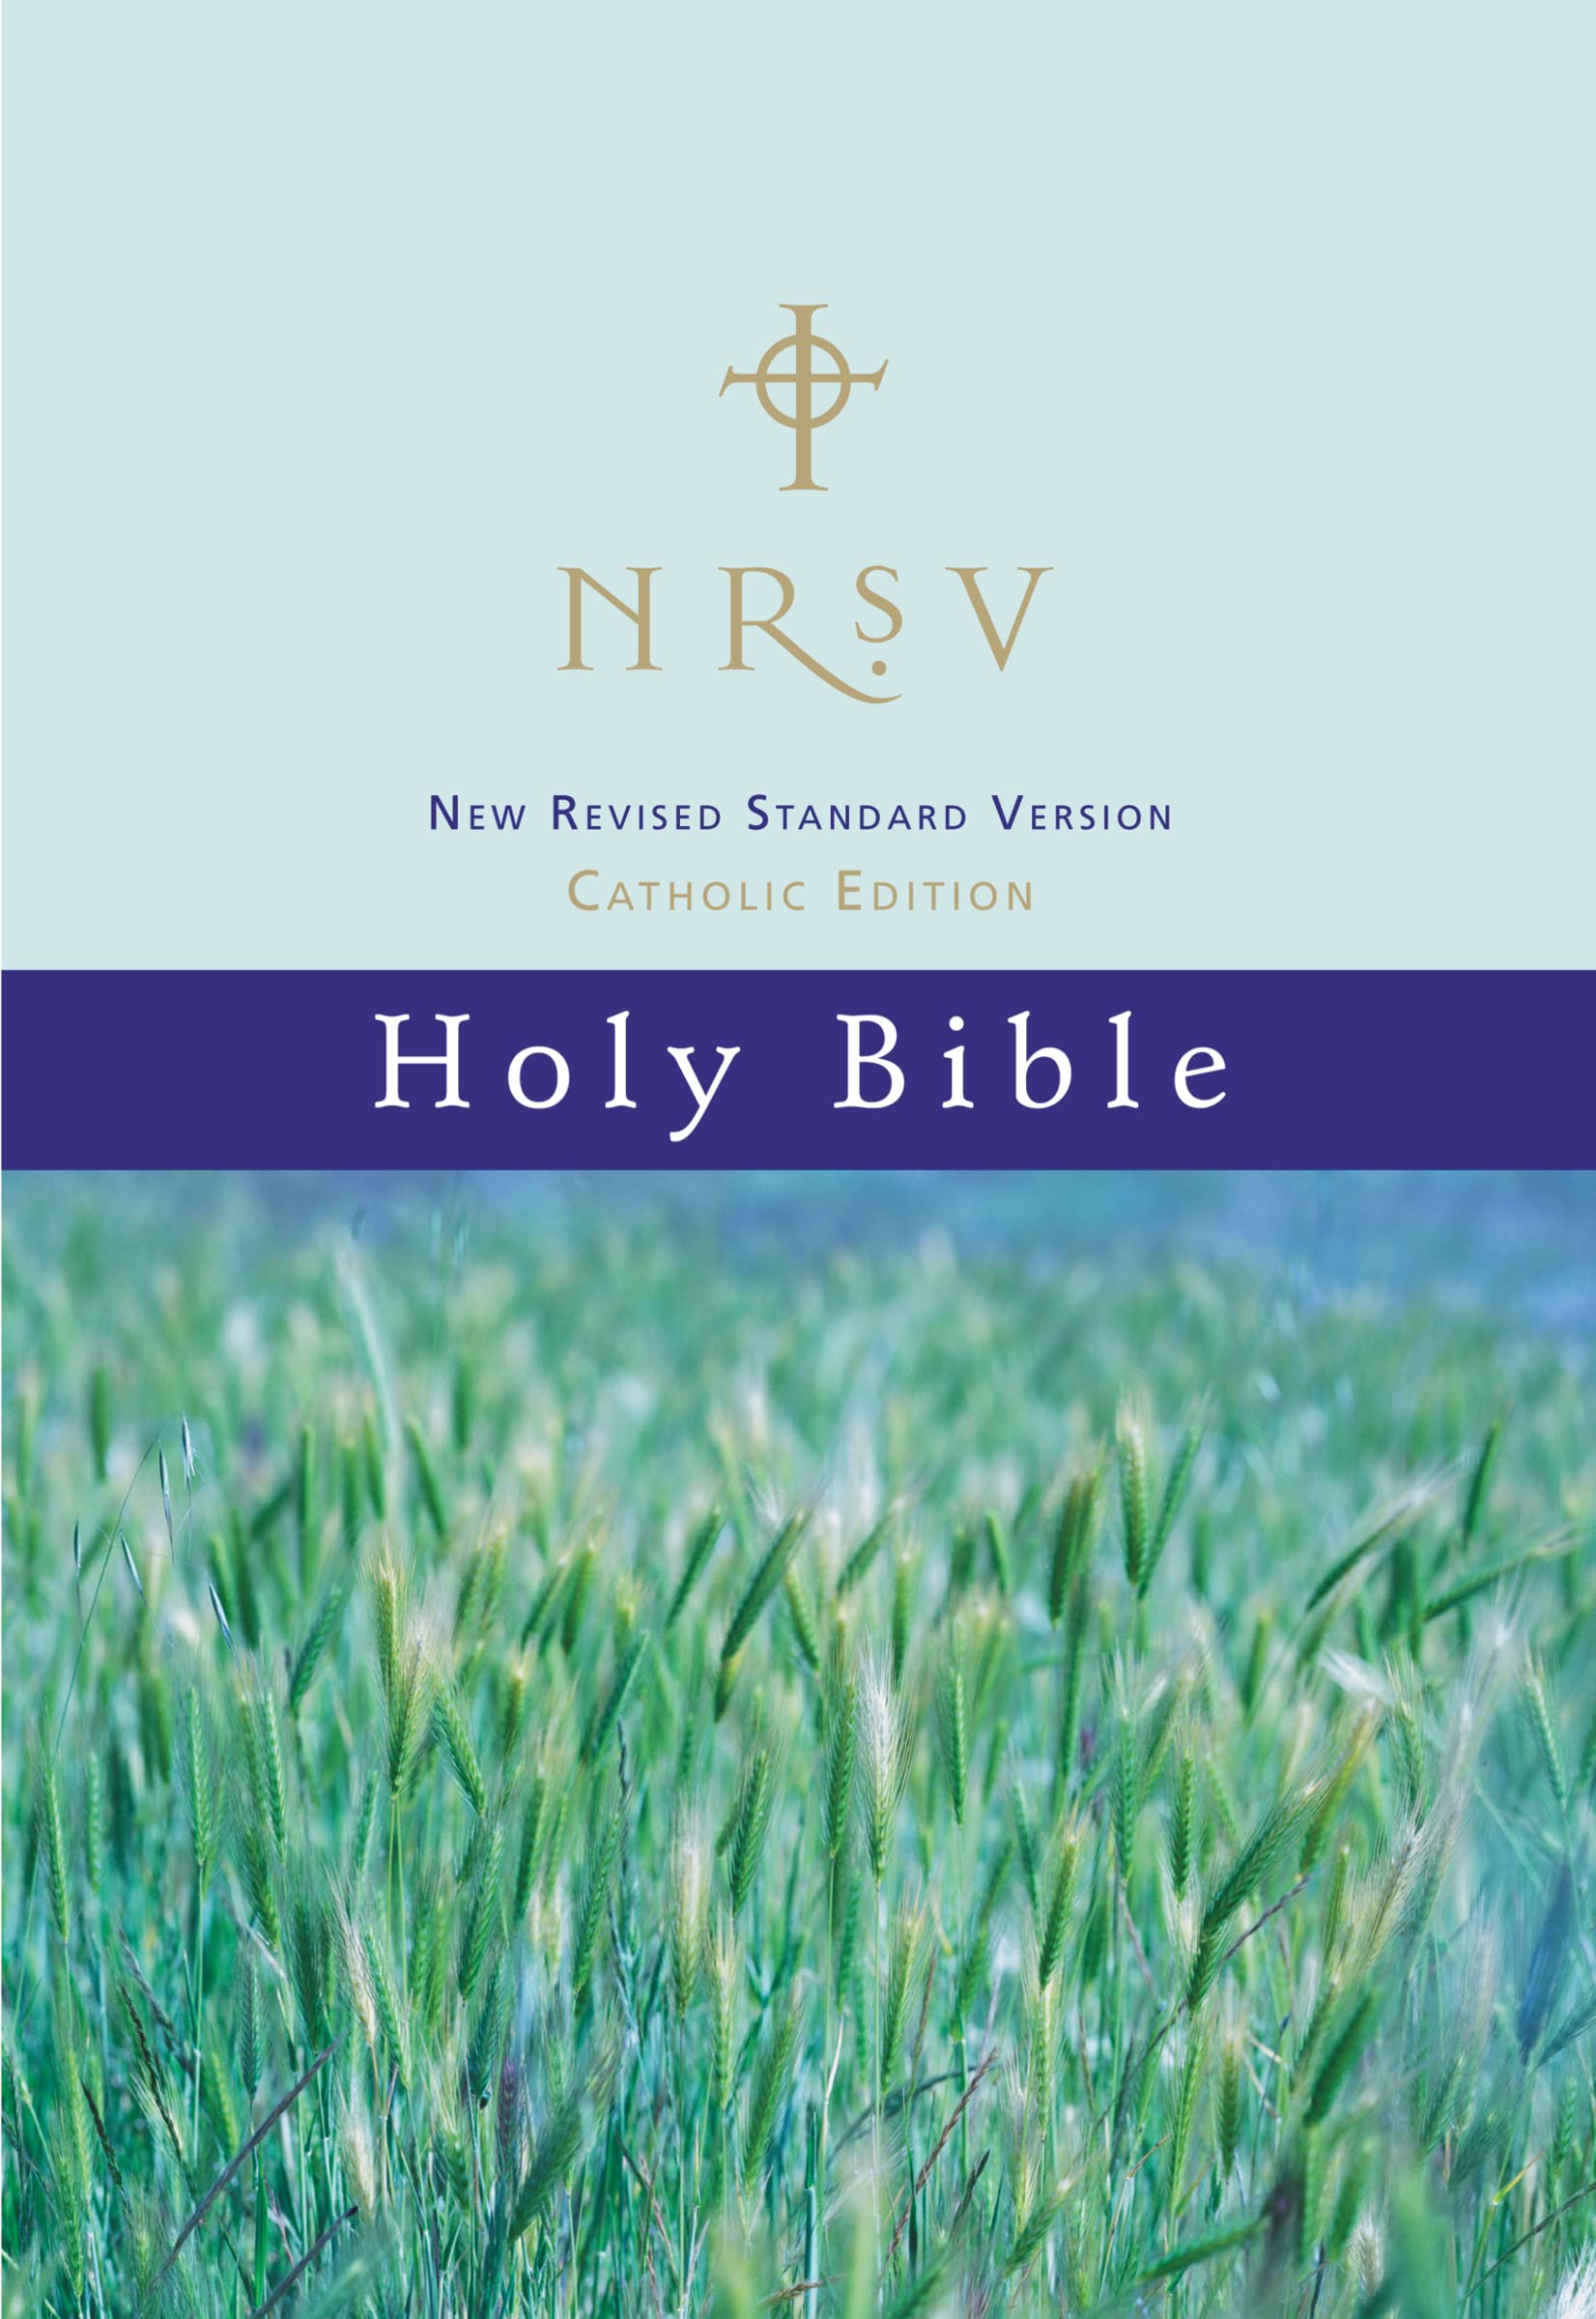 NRSV Catholic Edition Bible